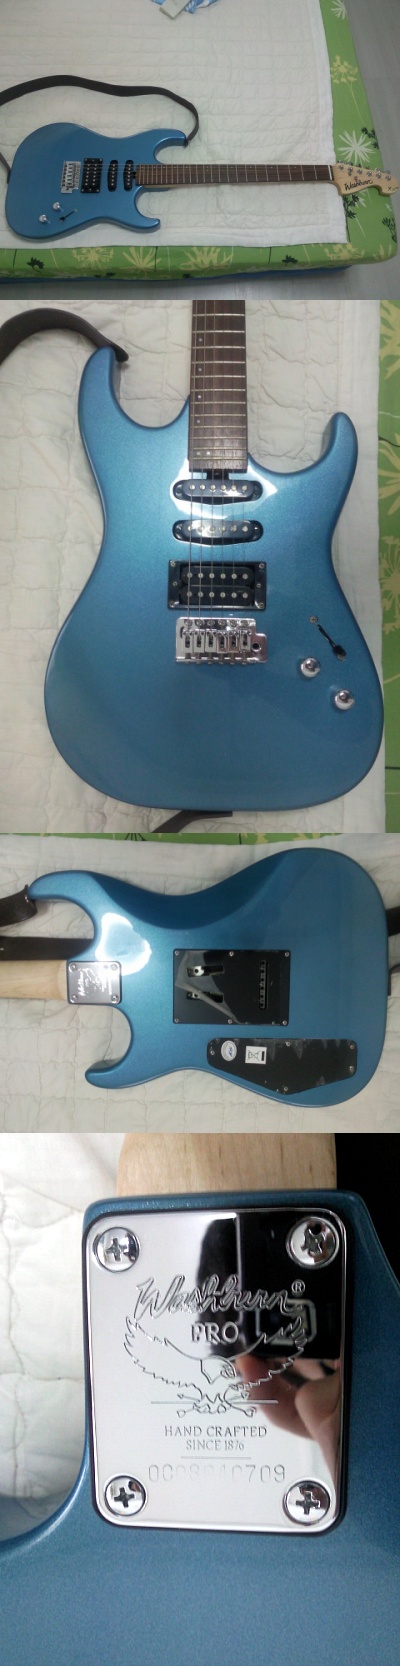 guitar2.jpg